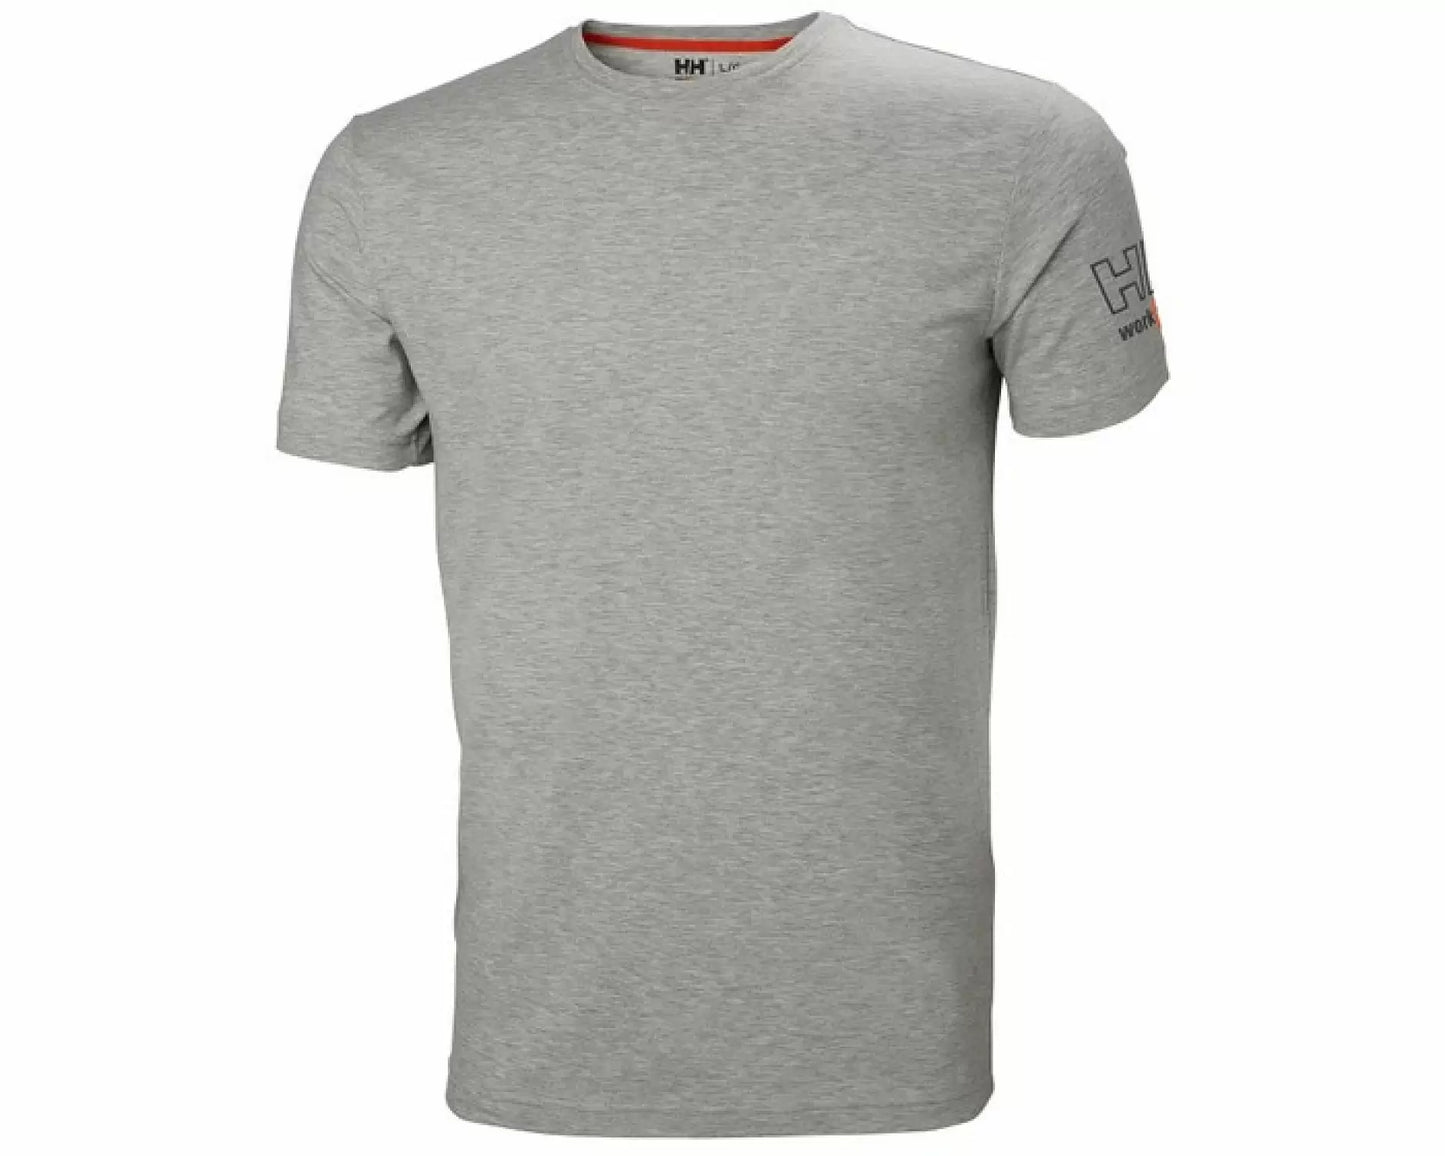 Helly Hansen Kensington T-Shirt Melange χρώμα | Τύπωμα-Κέντημα | Design Molossos